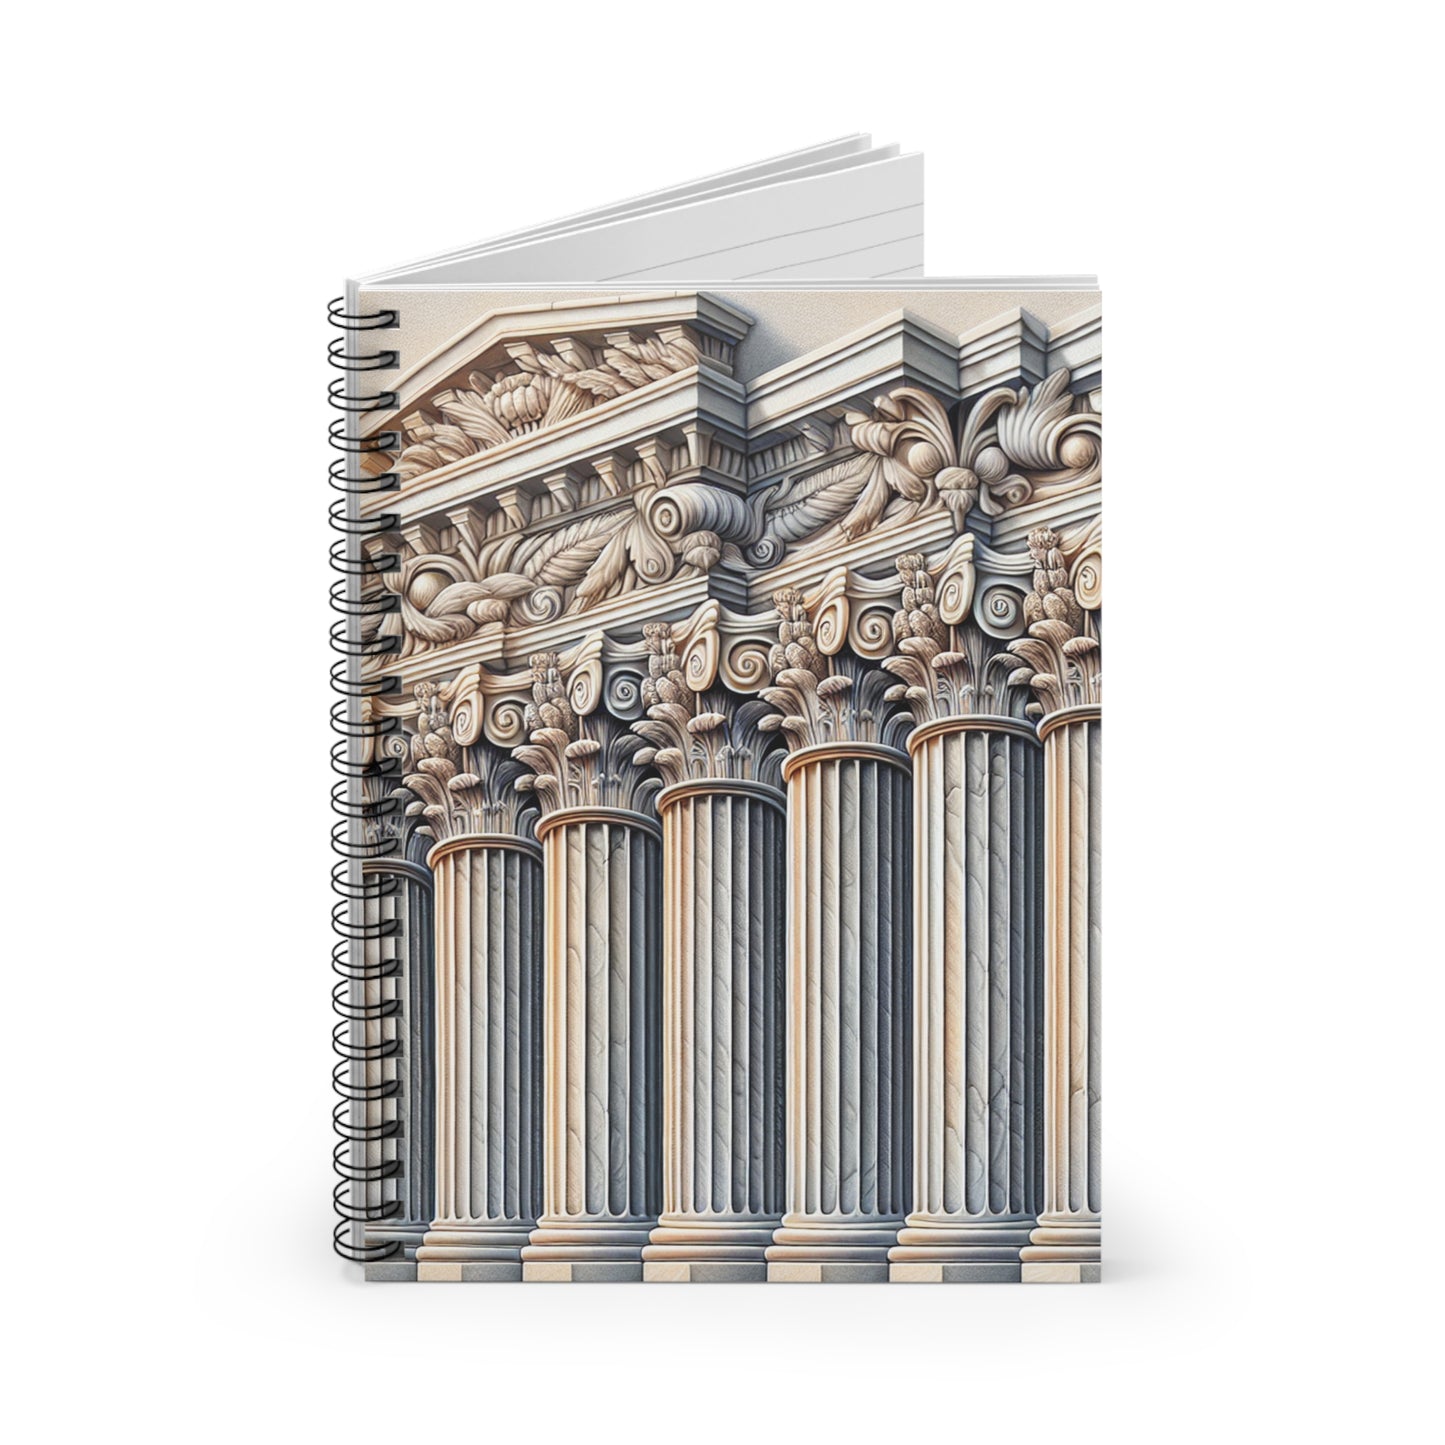 "Columnas de pared 3D: una obra de arte arquitectónica" - Cuaderno de espiral The Alien (línea rayada) Estilo trompe-l'oeil